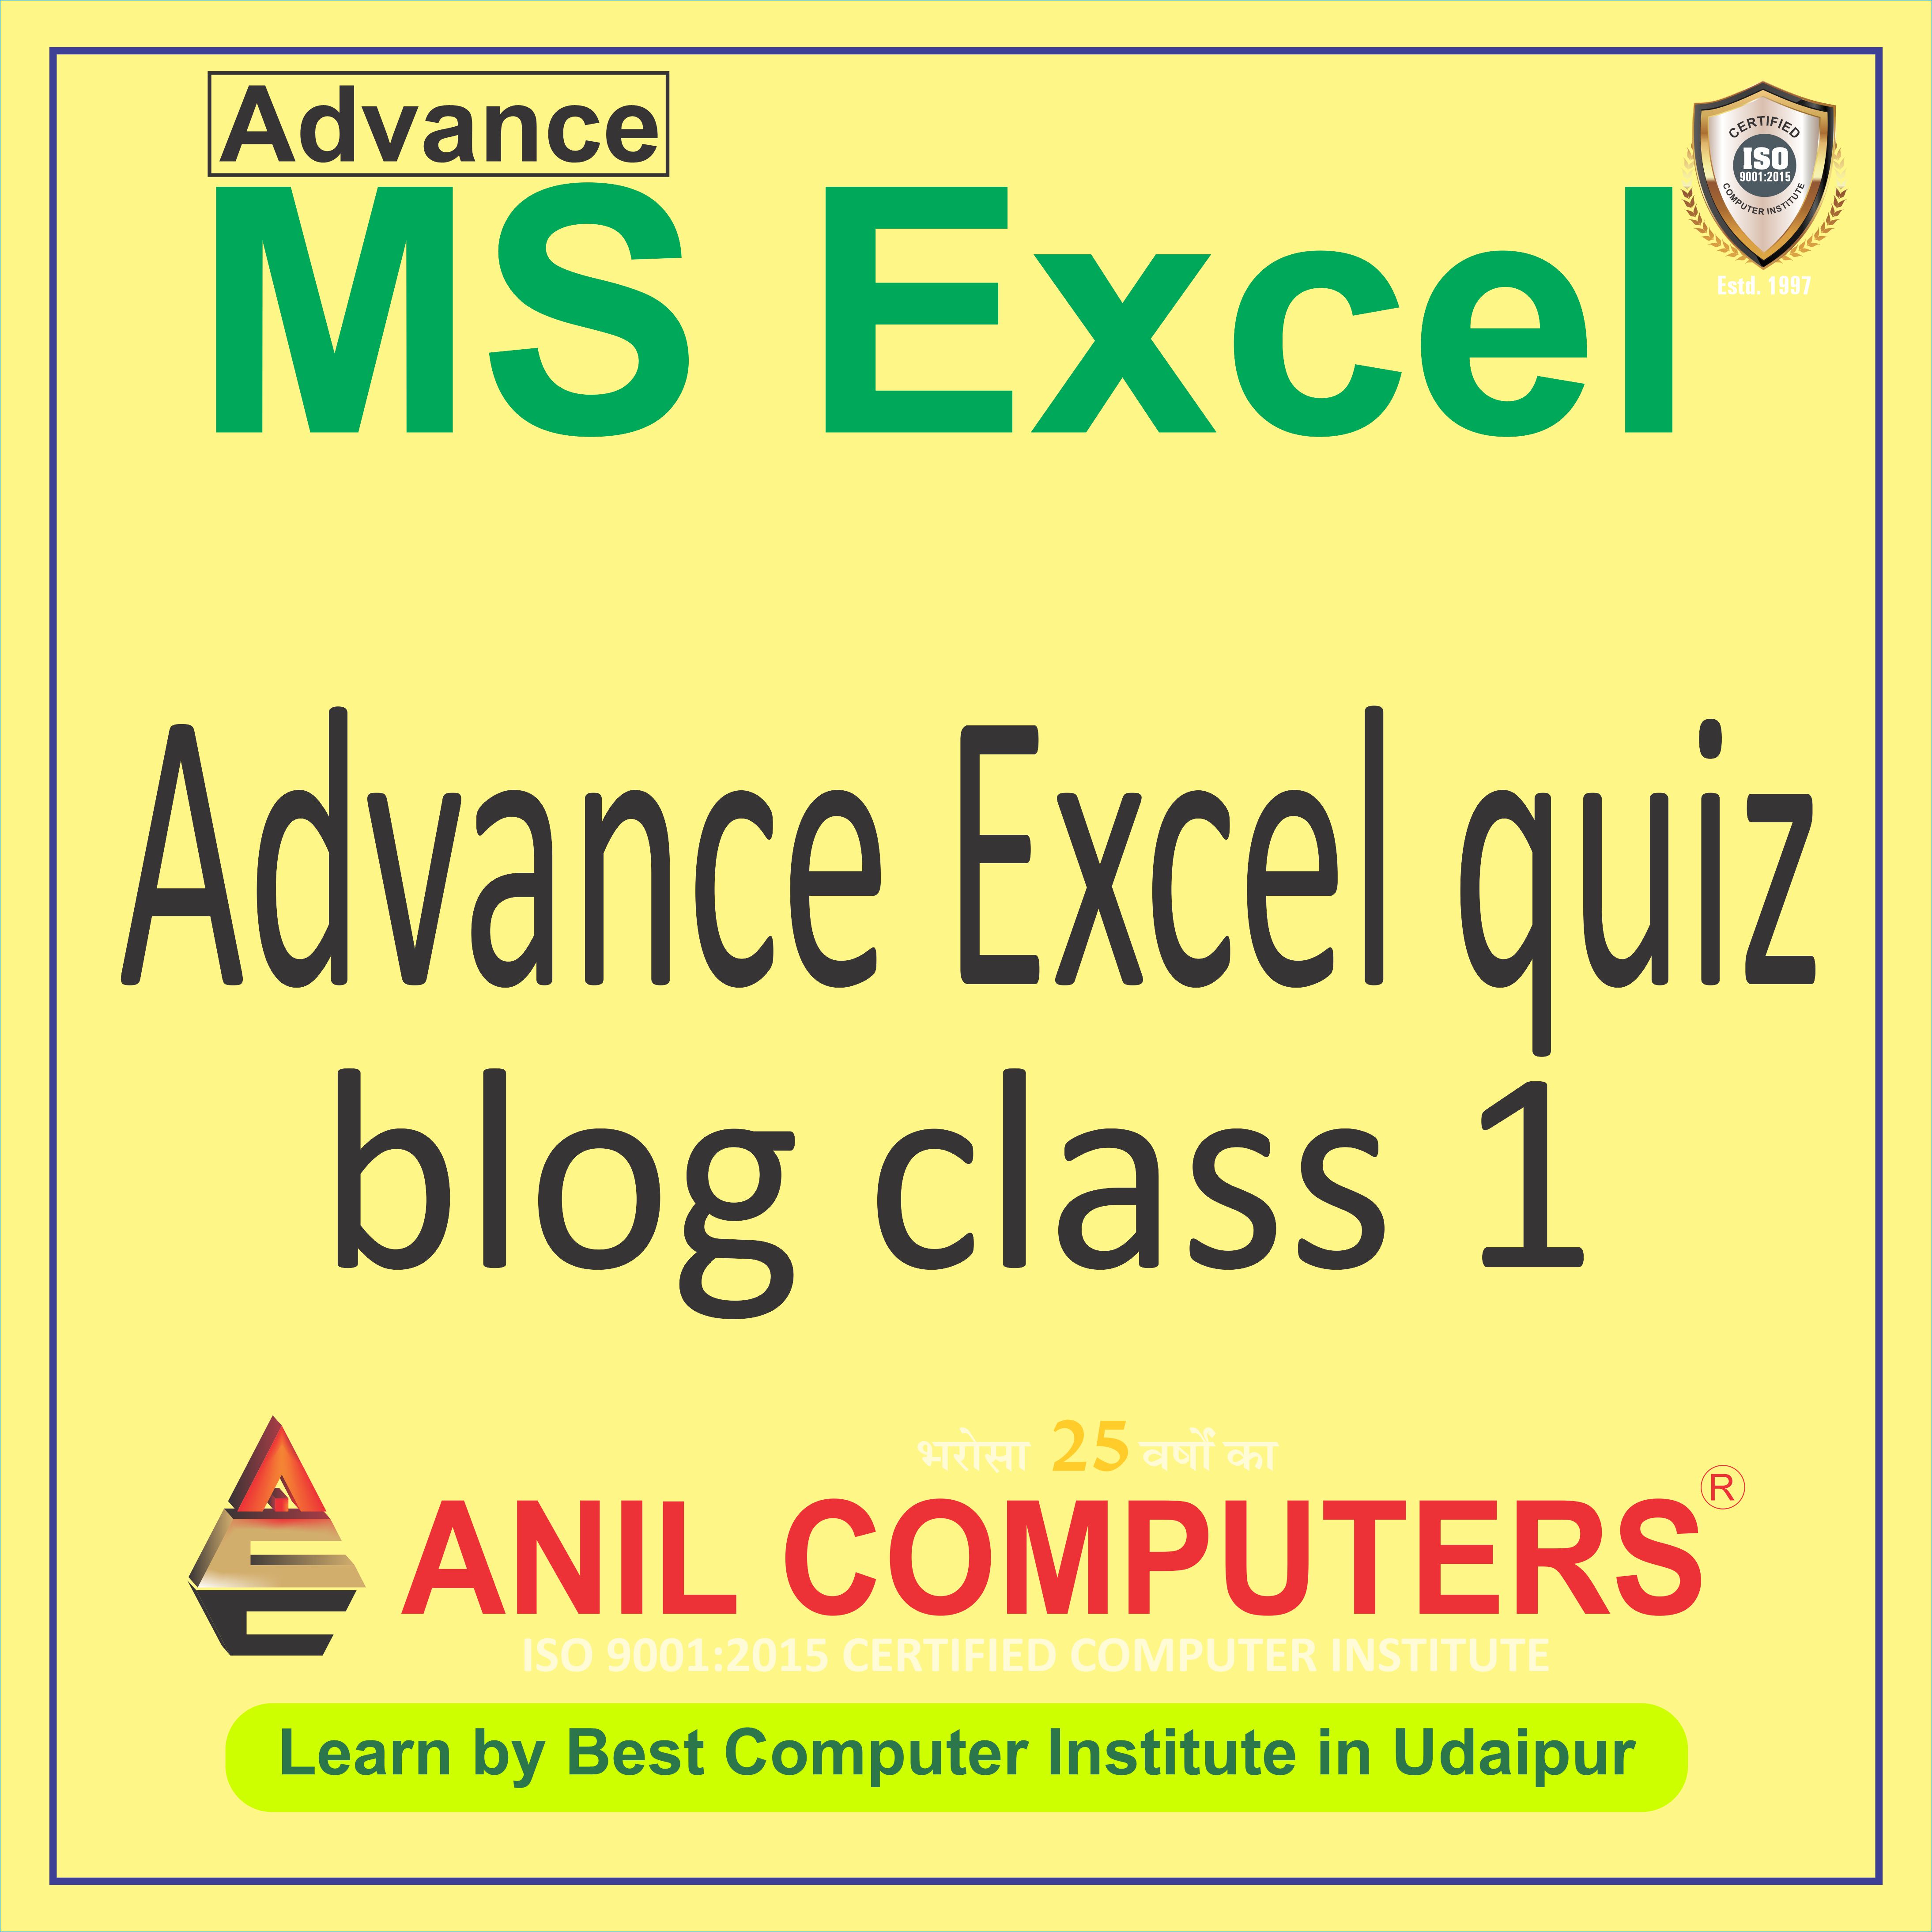 Advance excel quiz blog Class 1